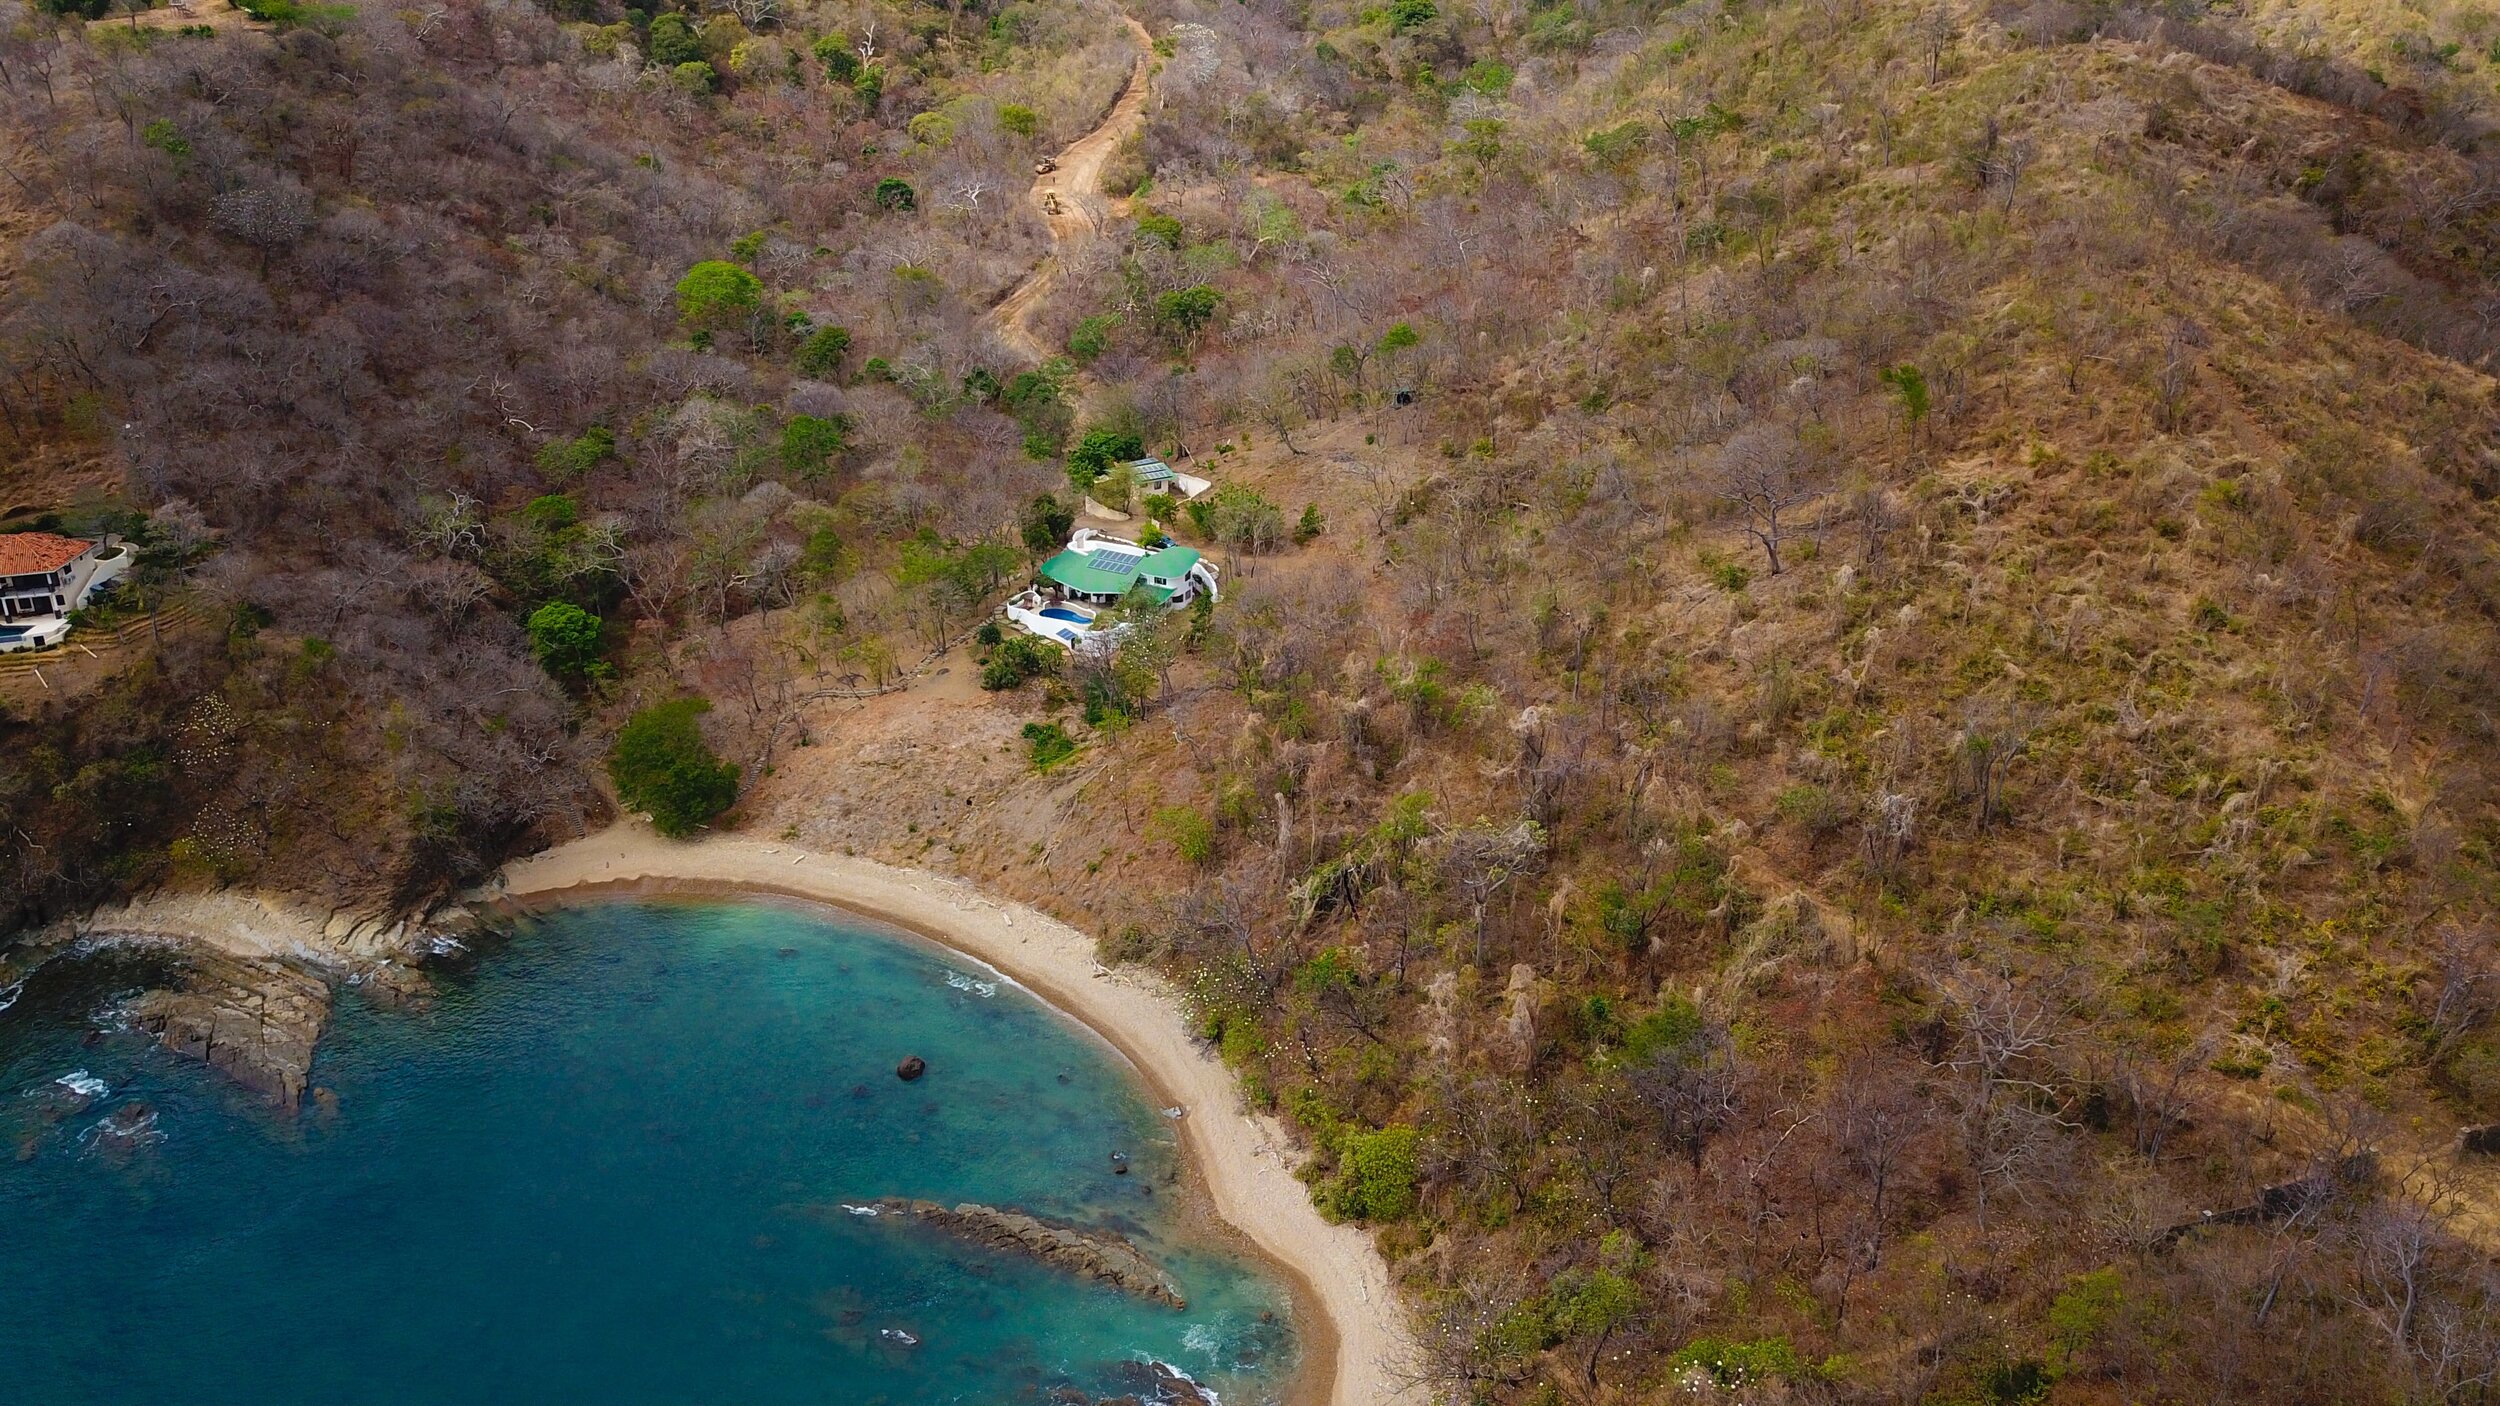 Ocean Front Property For Sale Nicaragua 2.JPEG